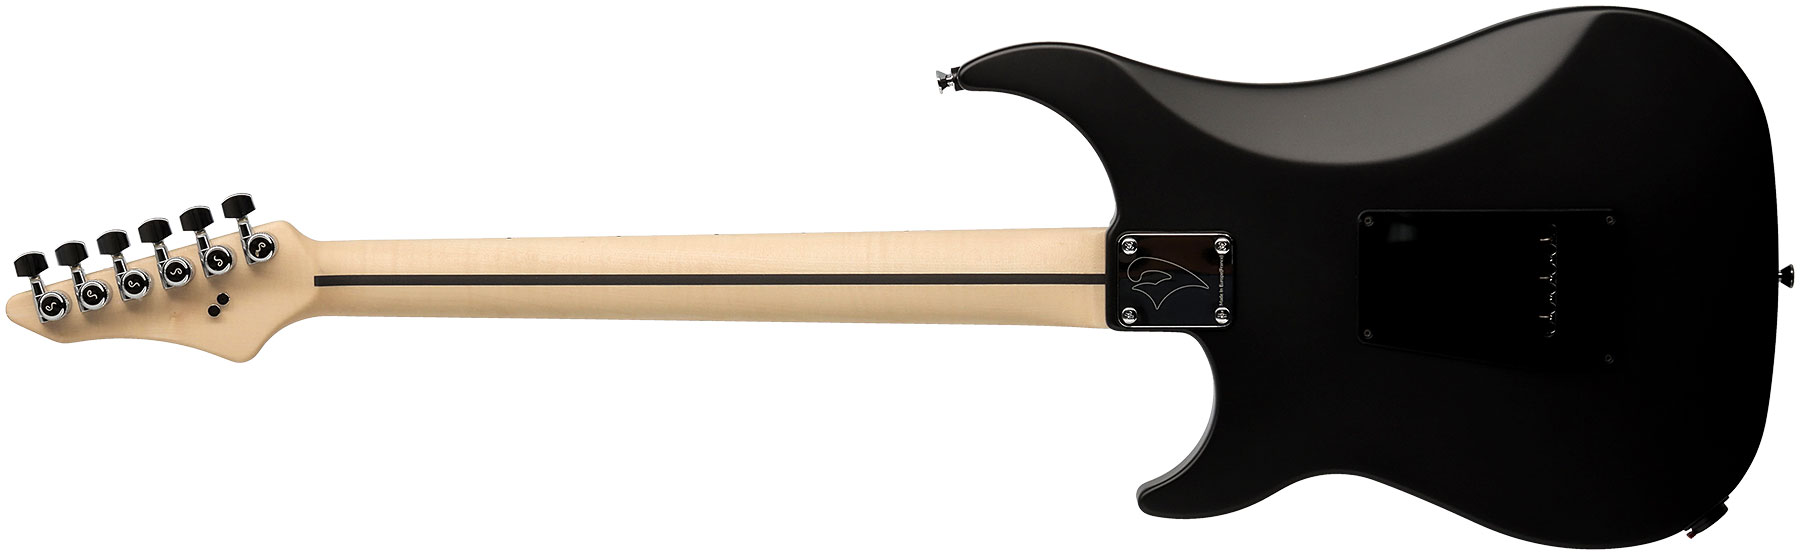 Vigier Excalibur Special Hsh Trem Rw - Black Diamond Matte - E-Gitarre in Str-Form - Variation 1